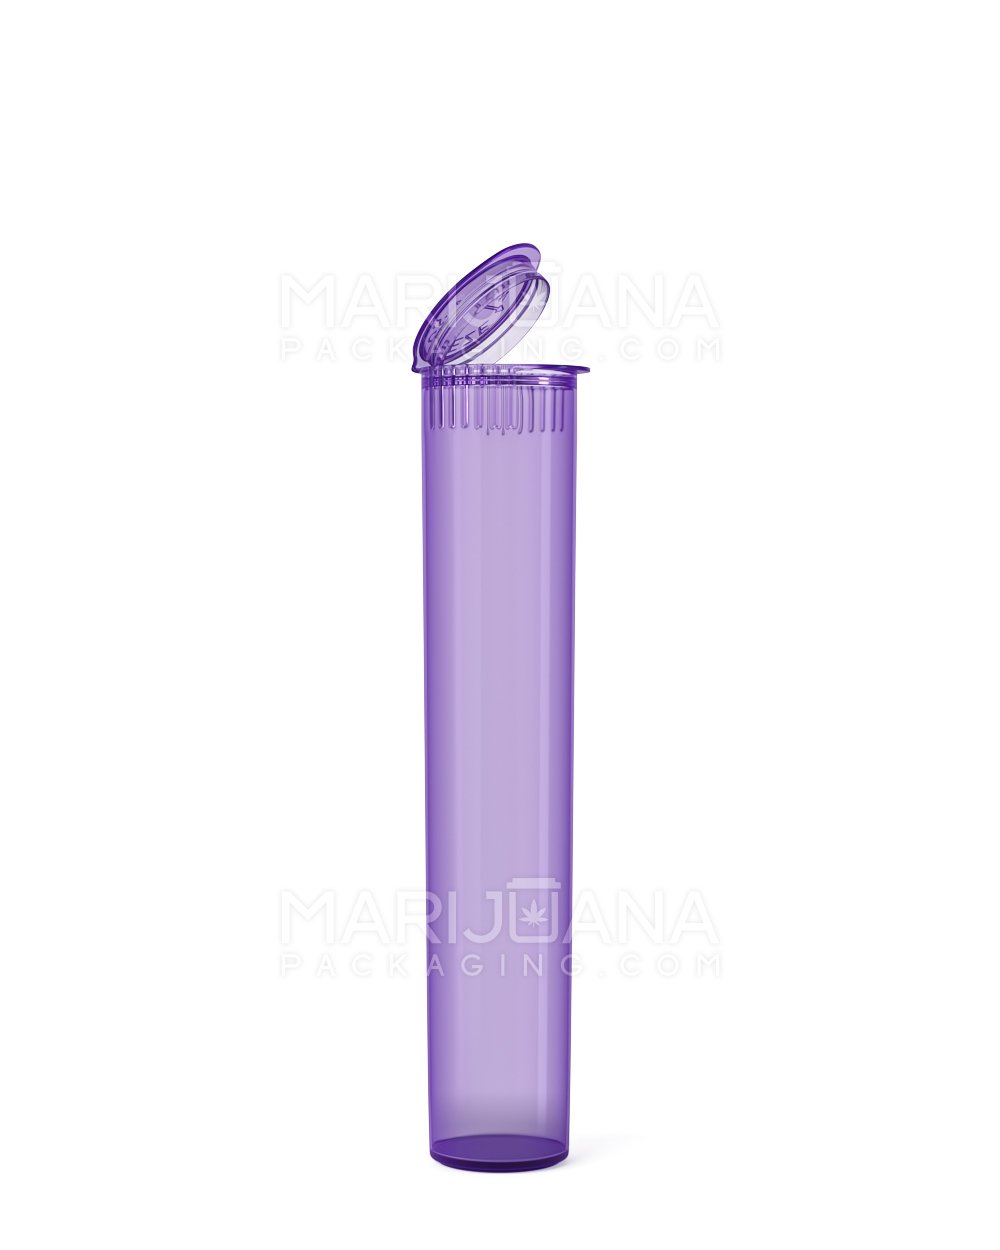 Child Resistant | Pop Top Translucent Plastic Pre-Roll Tubes | 95mm - Purple - 1000 Count - 1